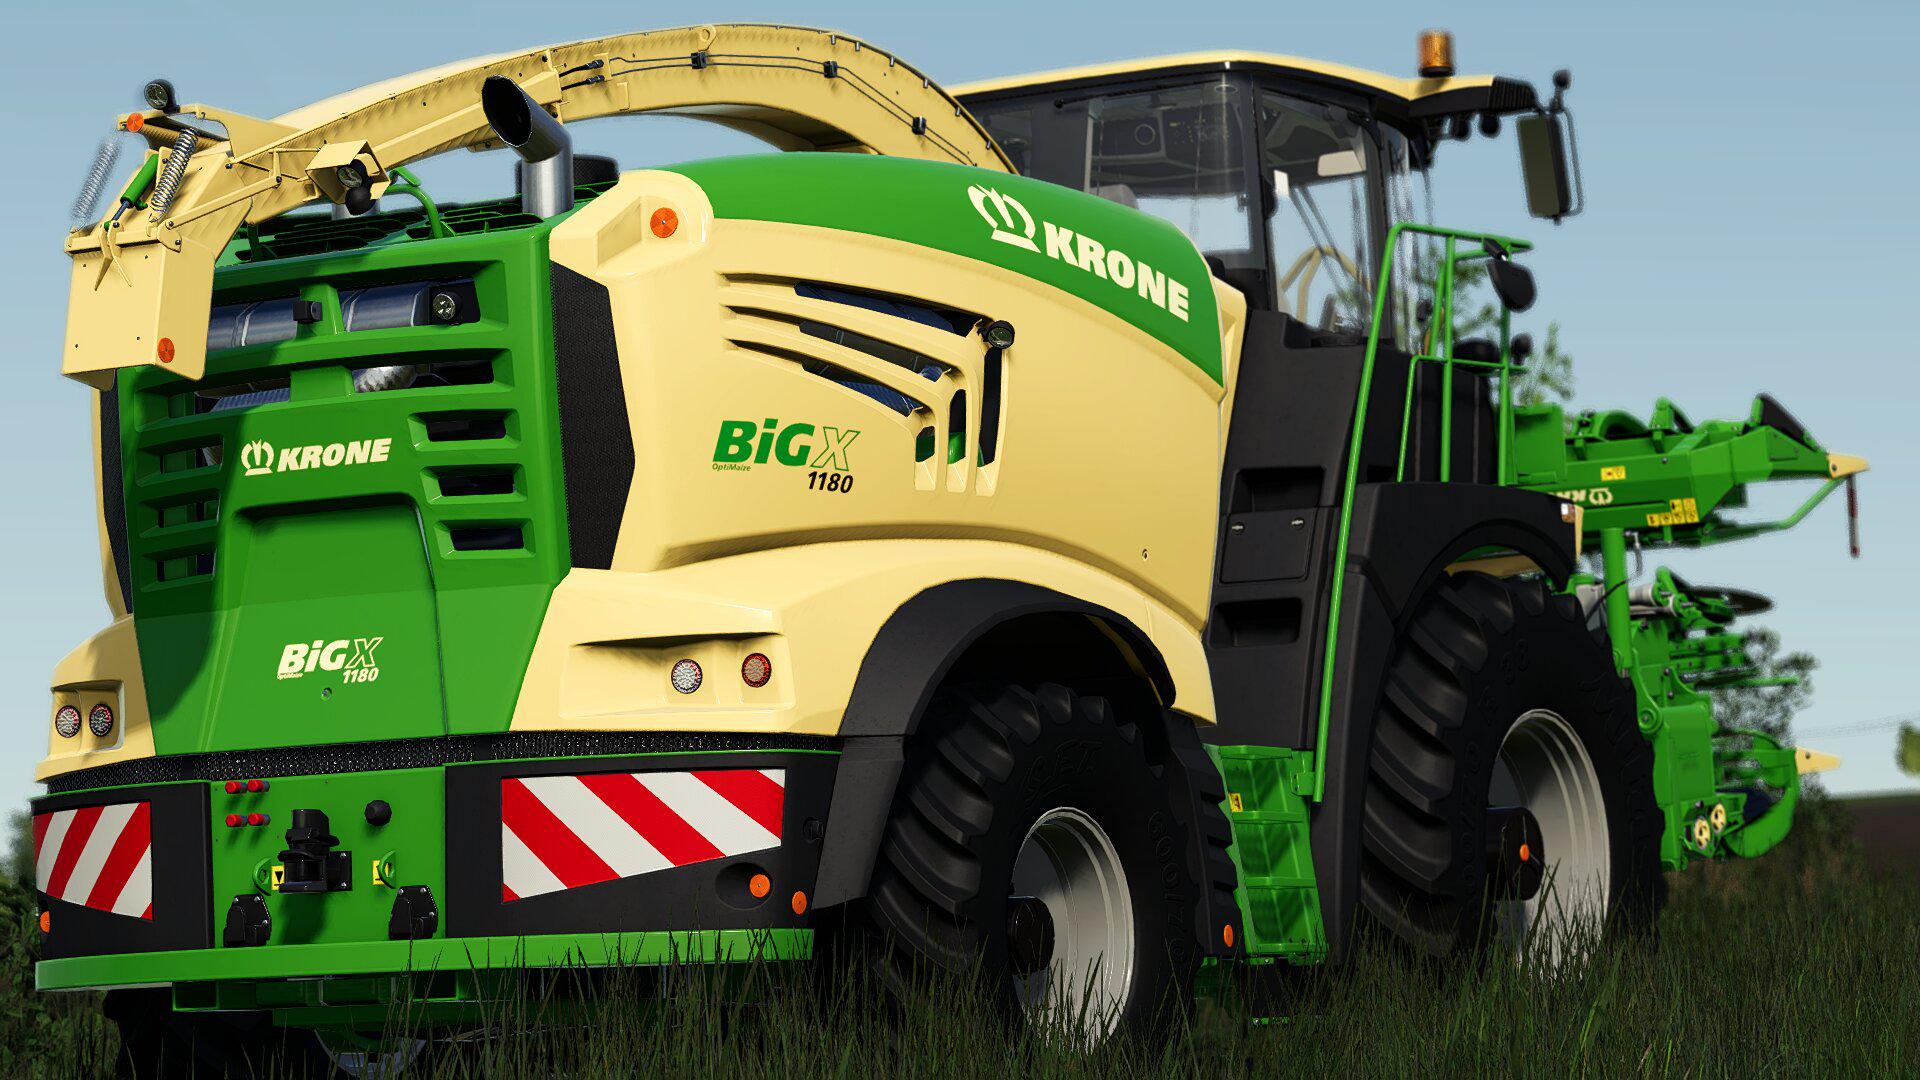 Fs19 Krone Bigx Serie 1 And 3 V10 Farming Simulator 19 Modsclub 3417